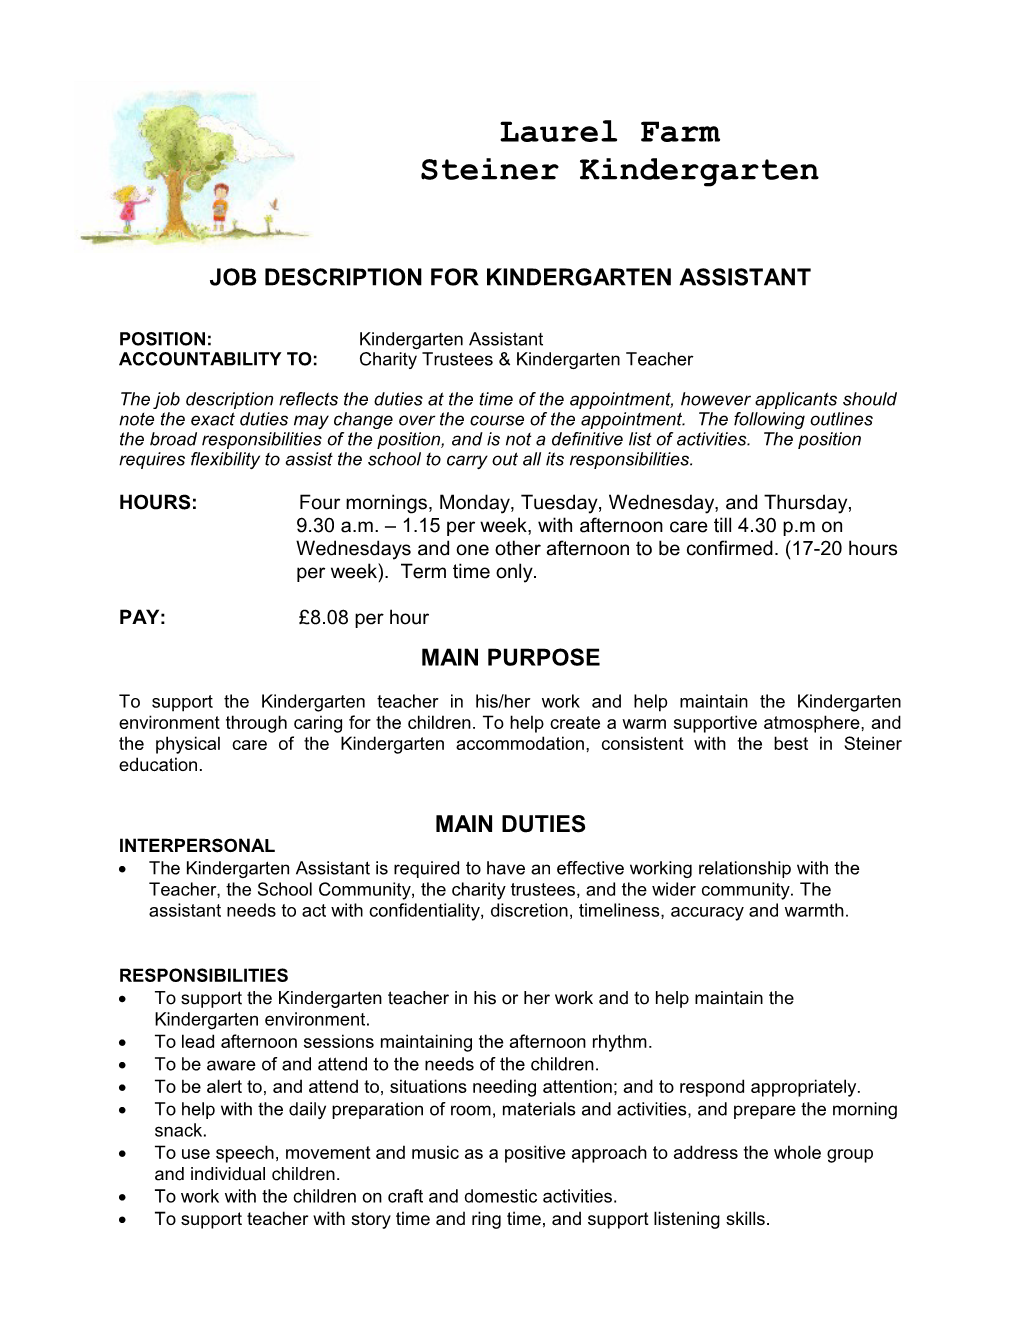 Nant –Y Cwm Steiner School Morning Kindergarten Assistant